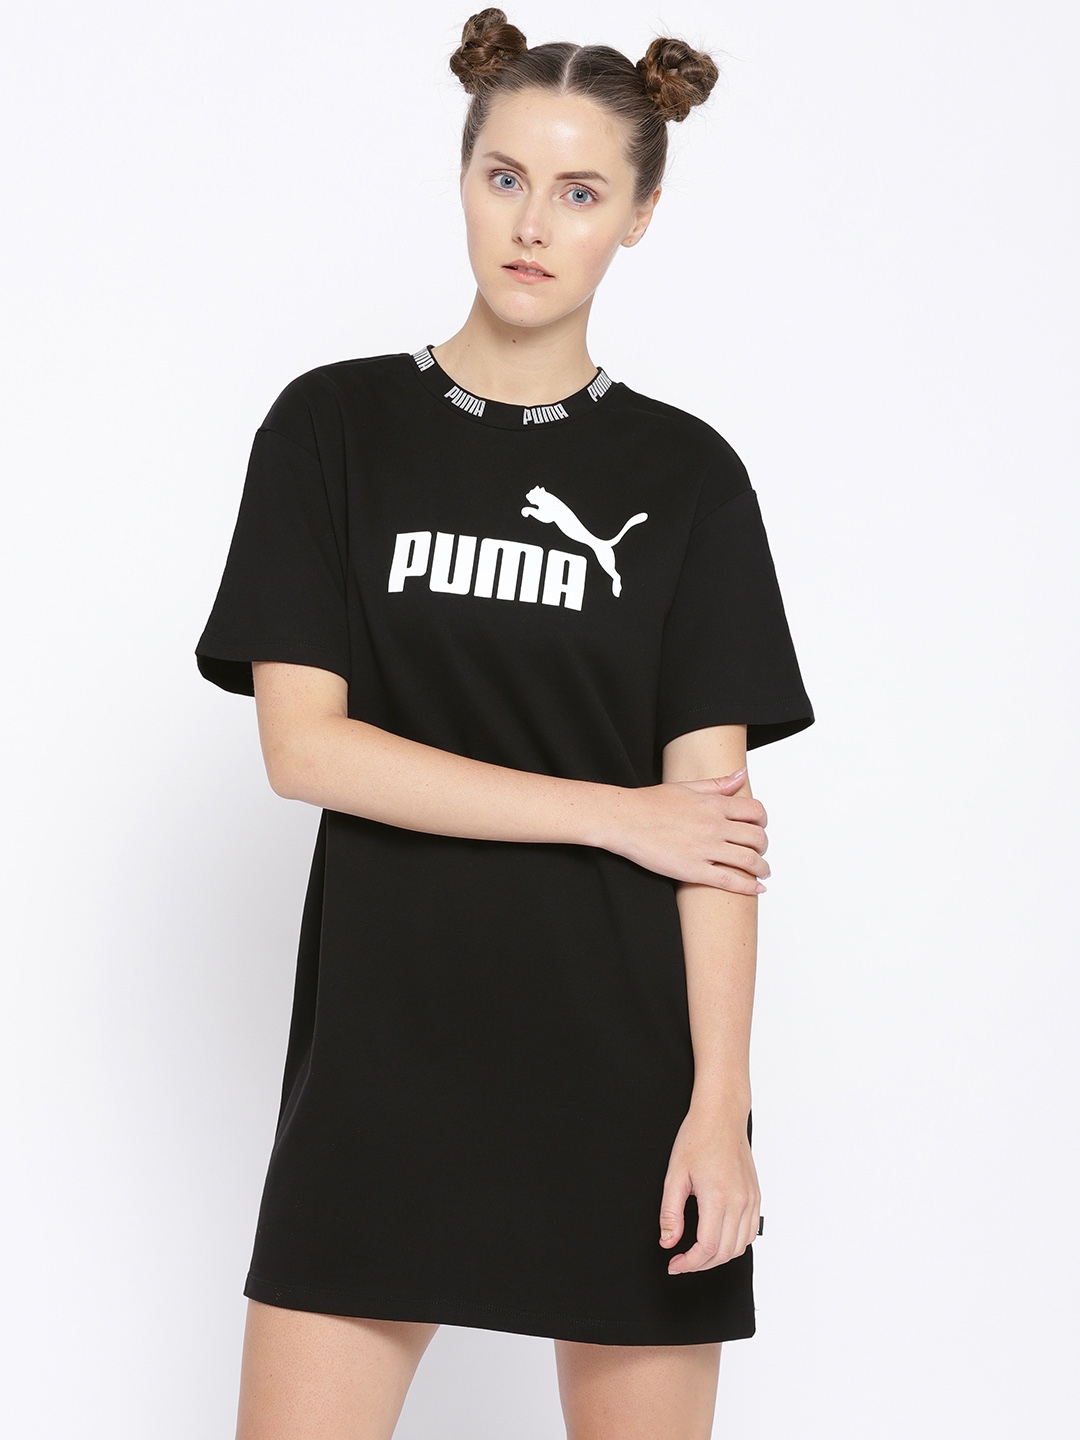 black and white puma dress